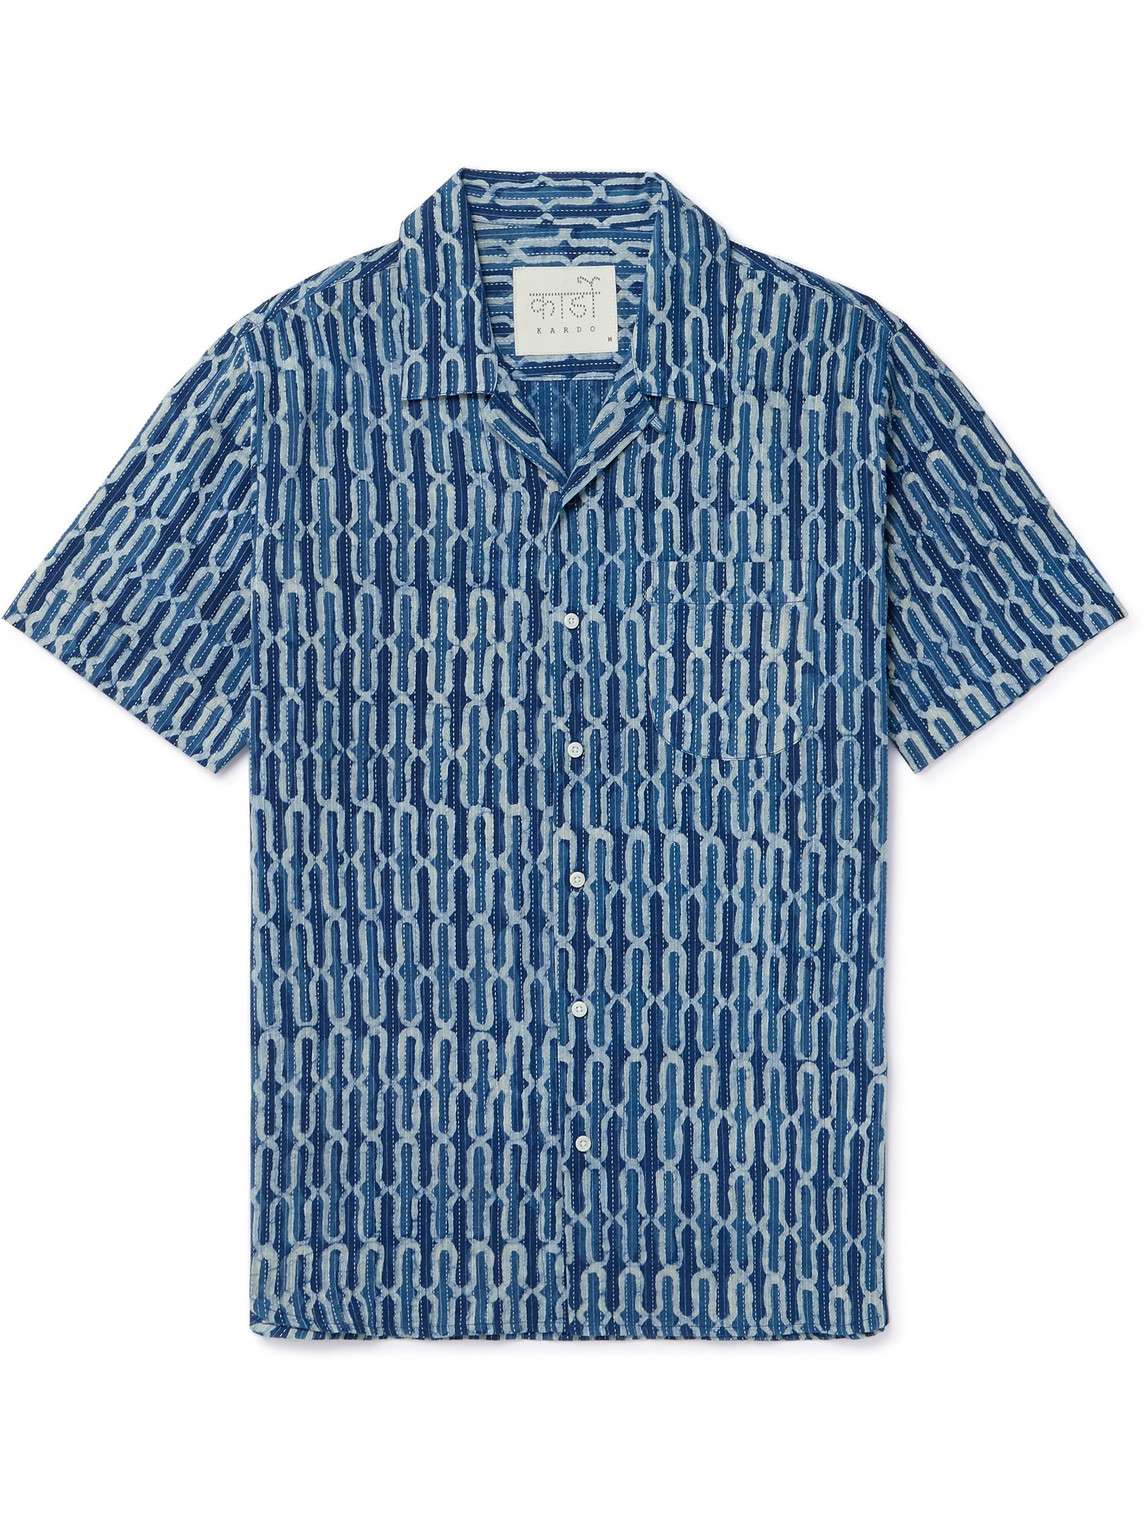 Kardo Lamar Embroidered Printed Cotton Shirt In Blue